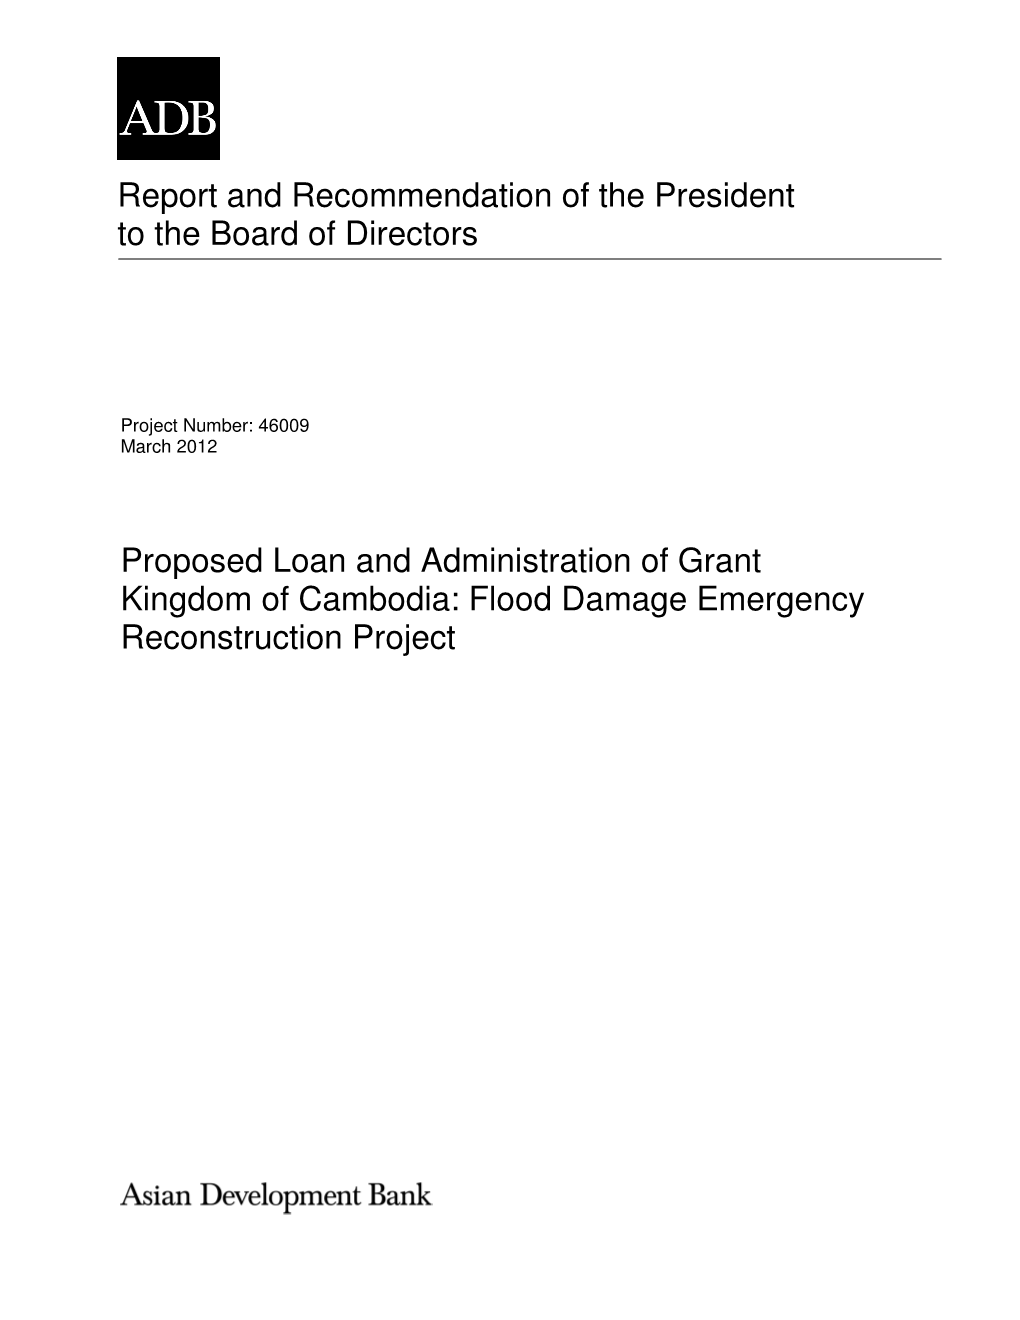 RRP: Cambodia: Flood Damage Emergency Reconstruction Project